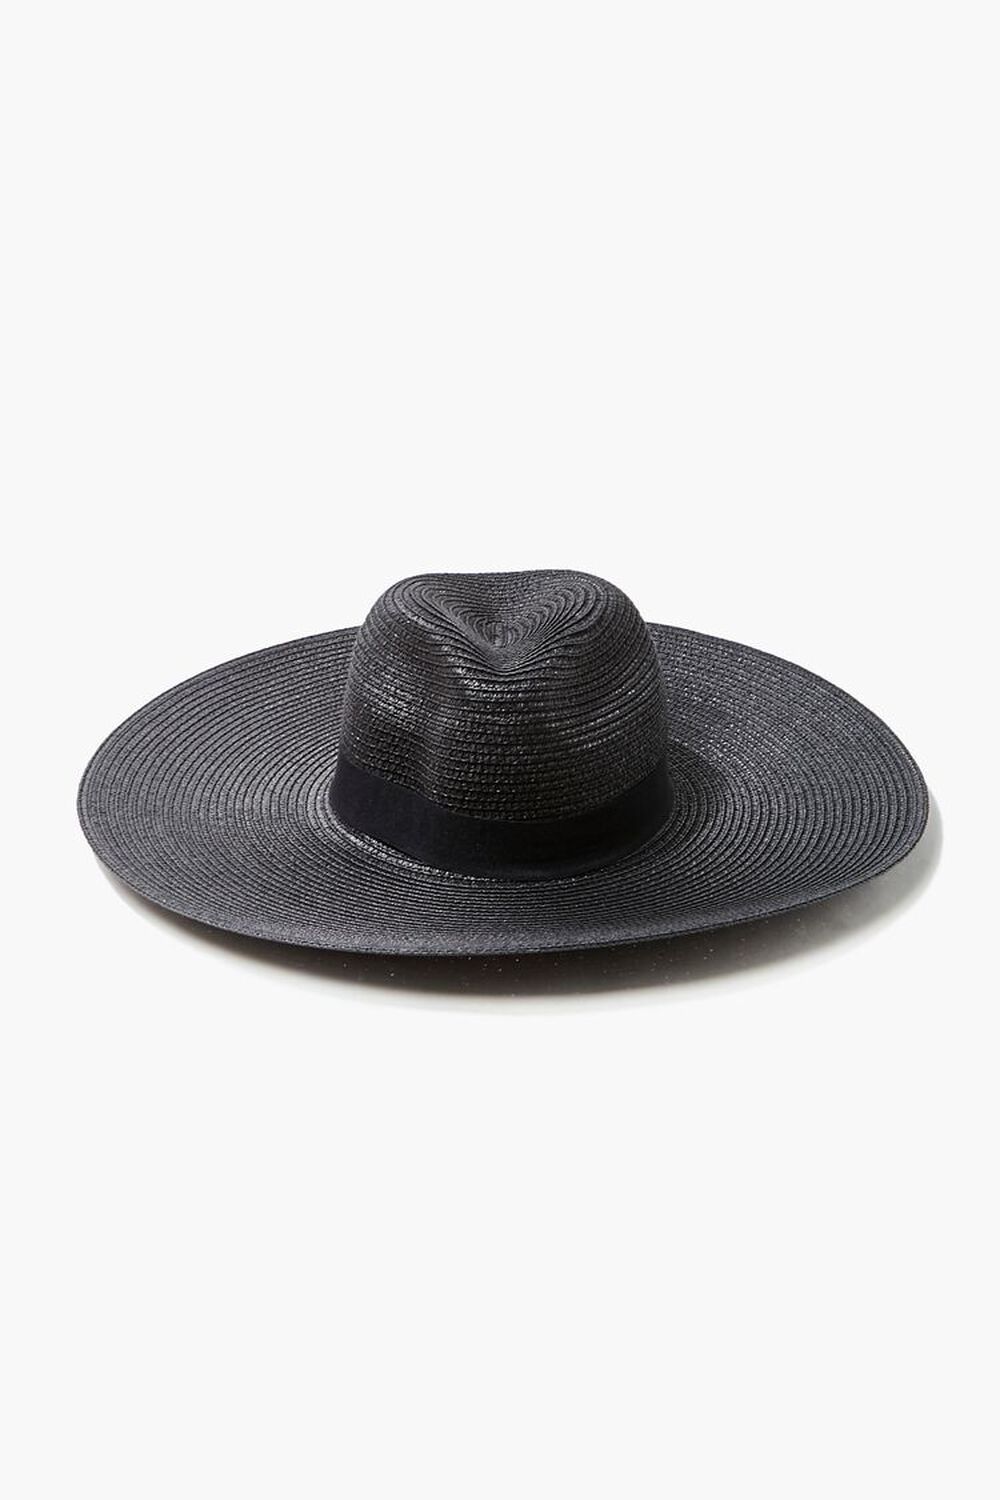 Faux Straw Panama Hat, image 1